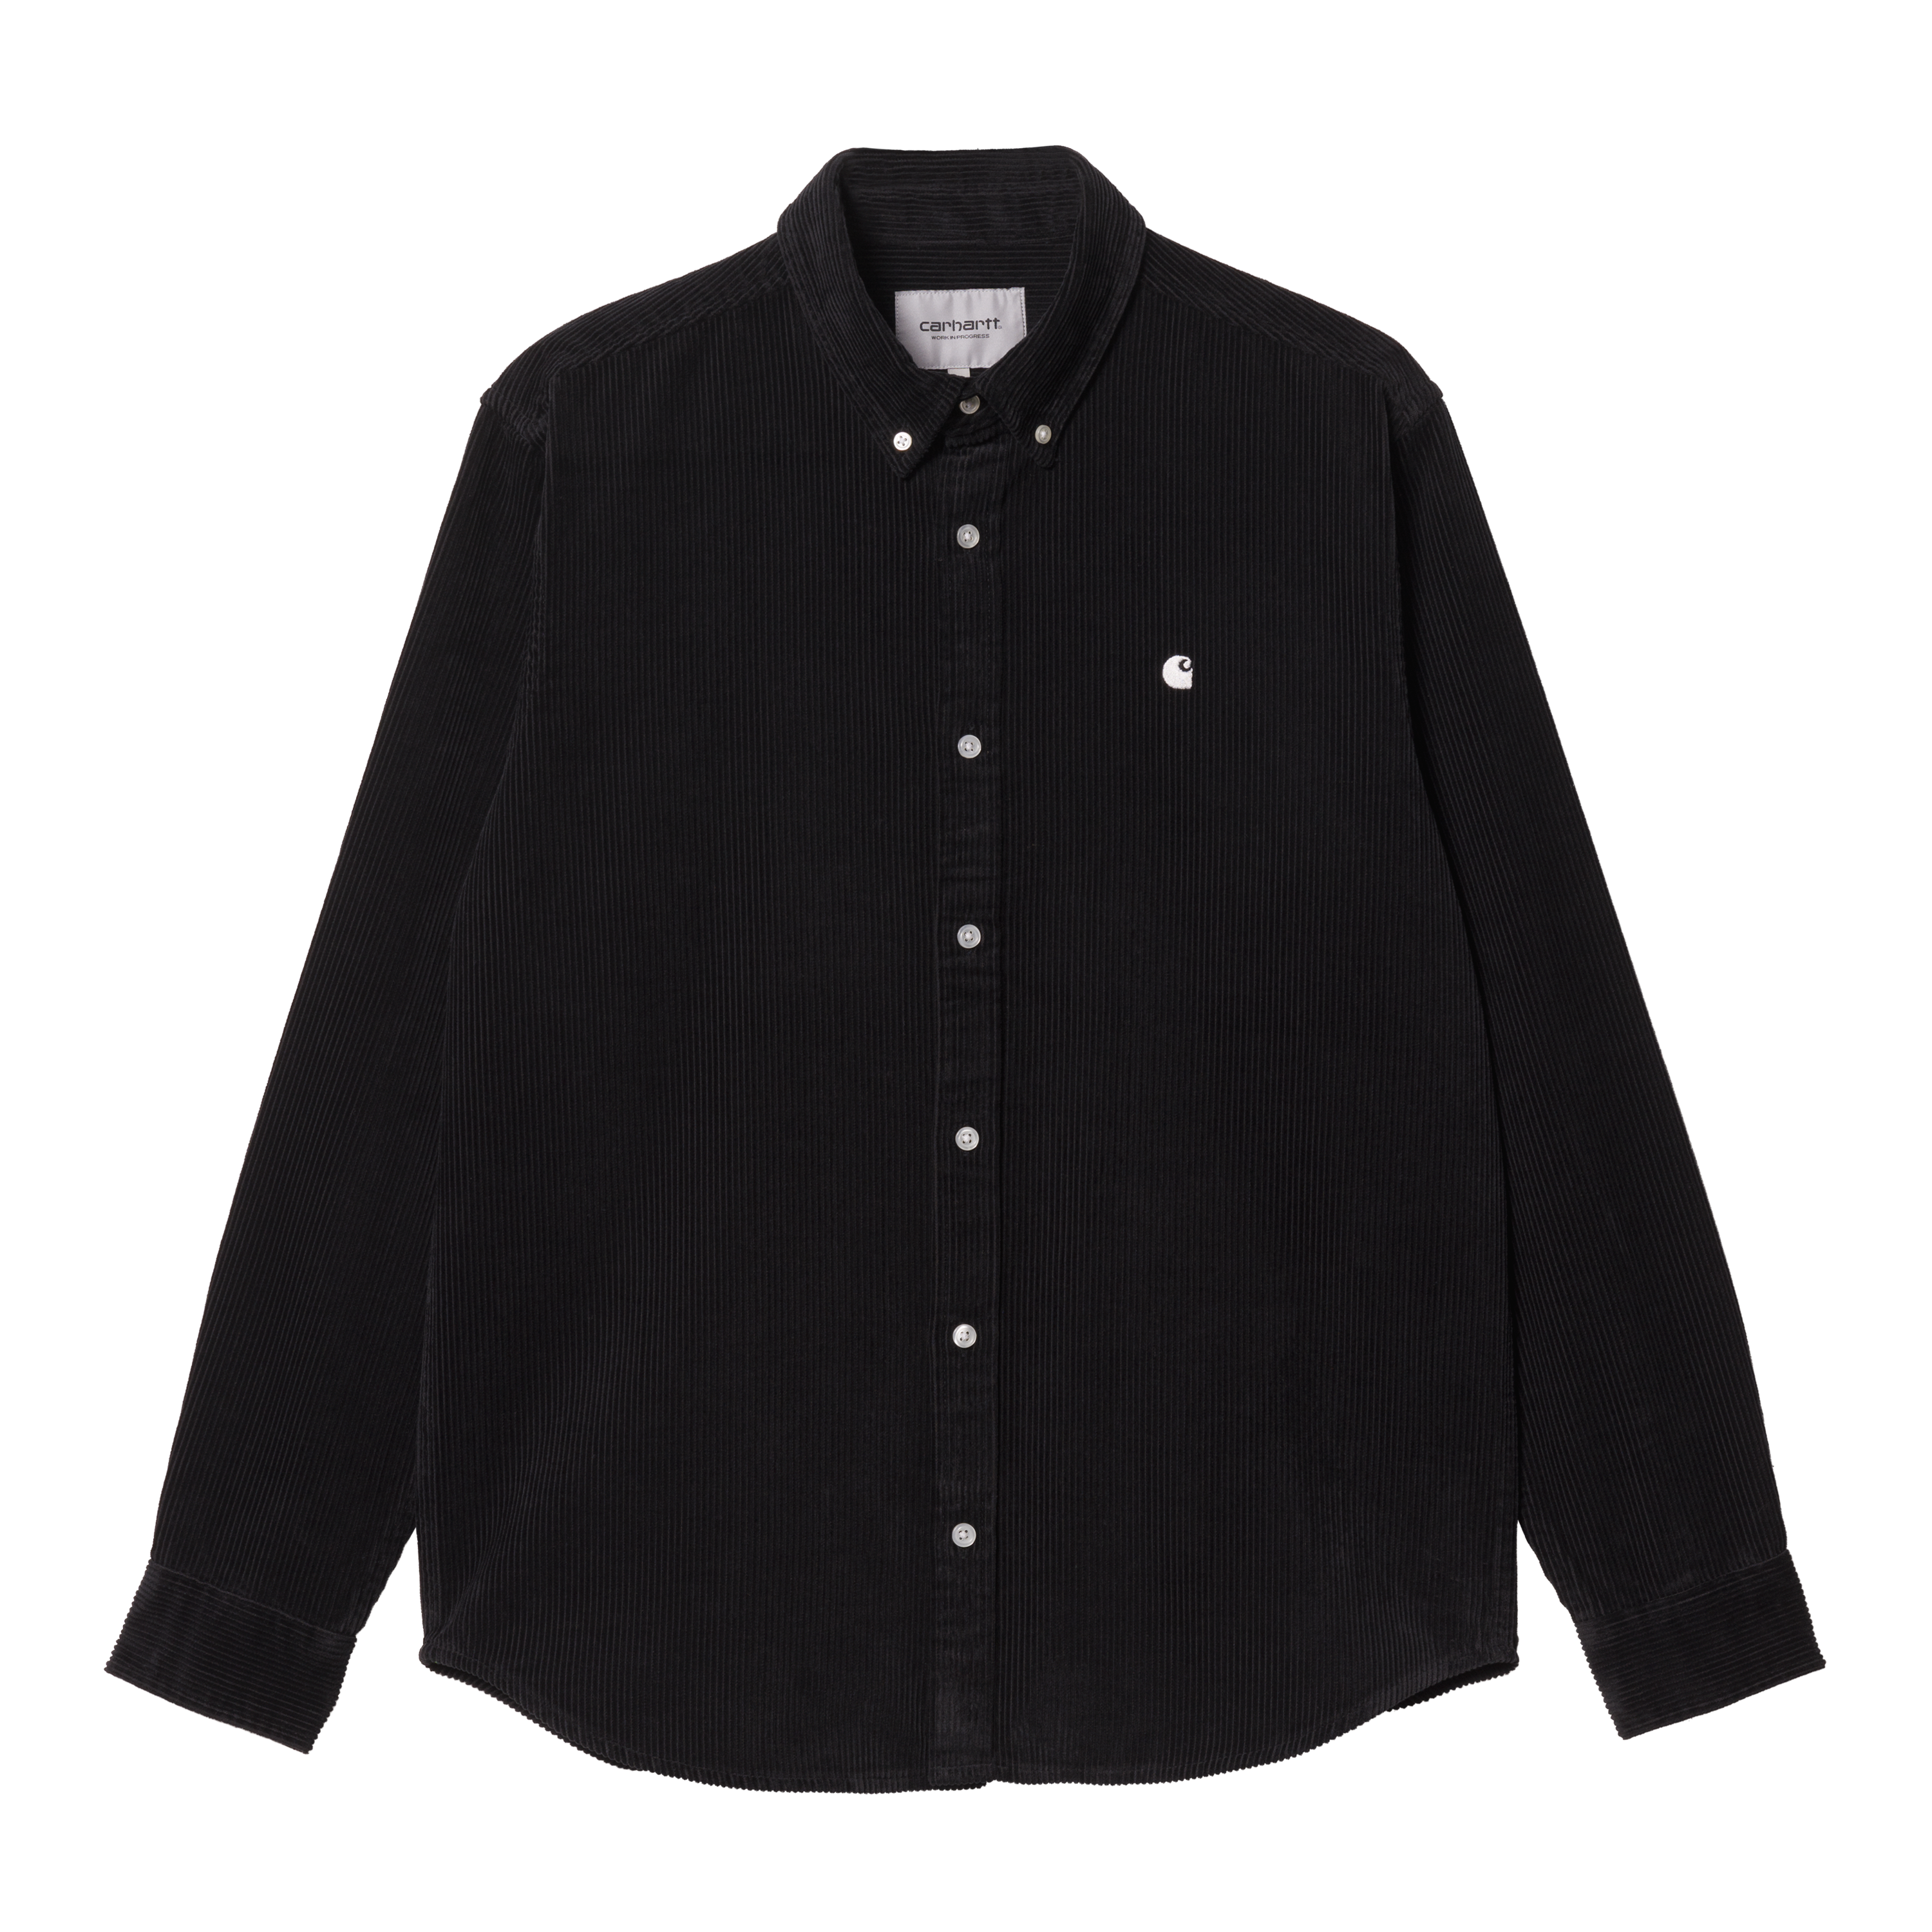 Carhartt WIP Long Sleeve Madison Fine Cord Shirt in Nero